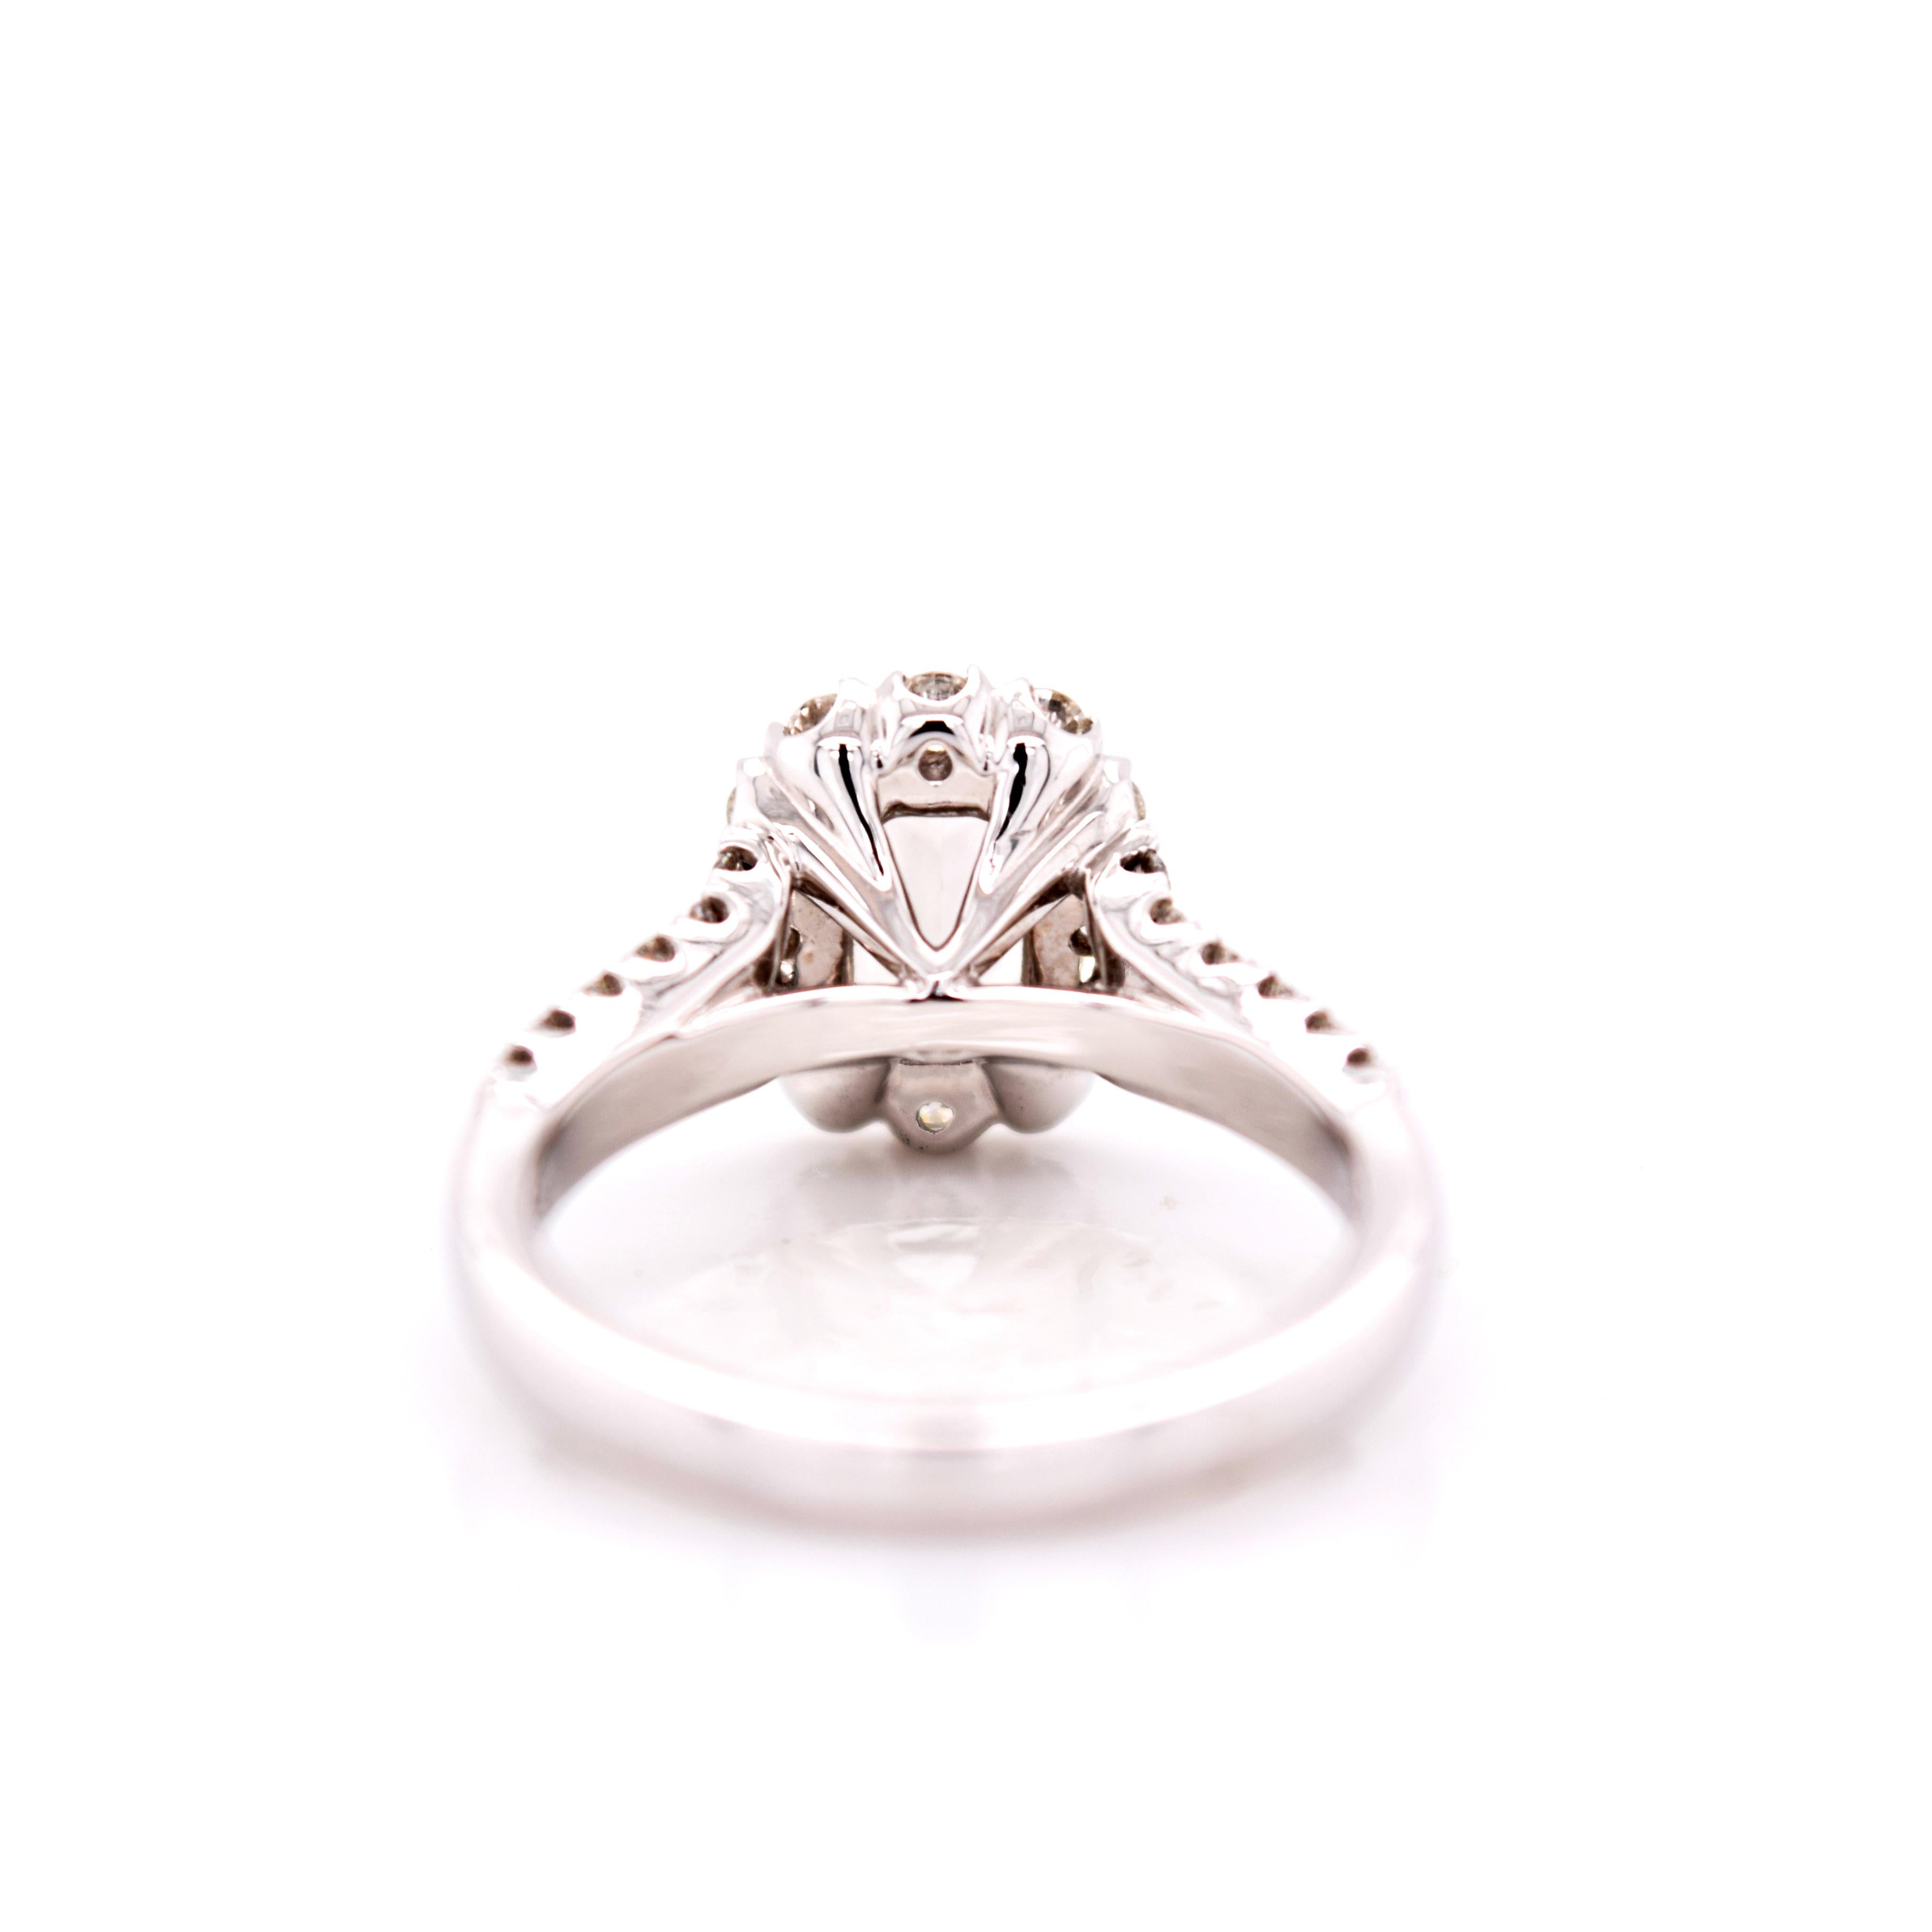 Crisscut 1.72 Carat Total Weight New Version of Emerald Cut Diamond Engagement Ring